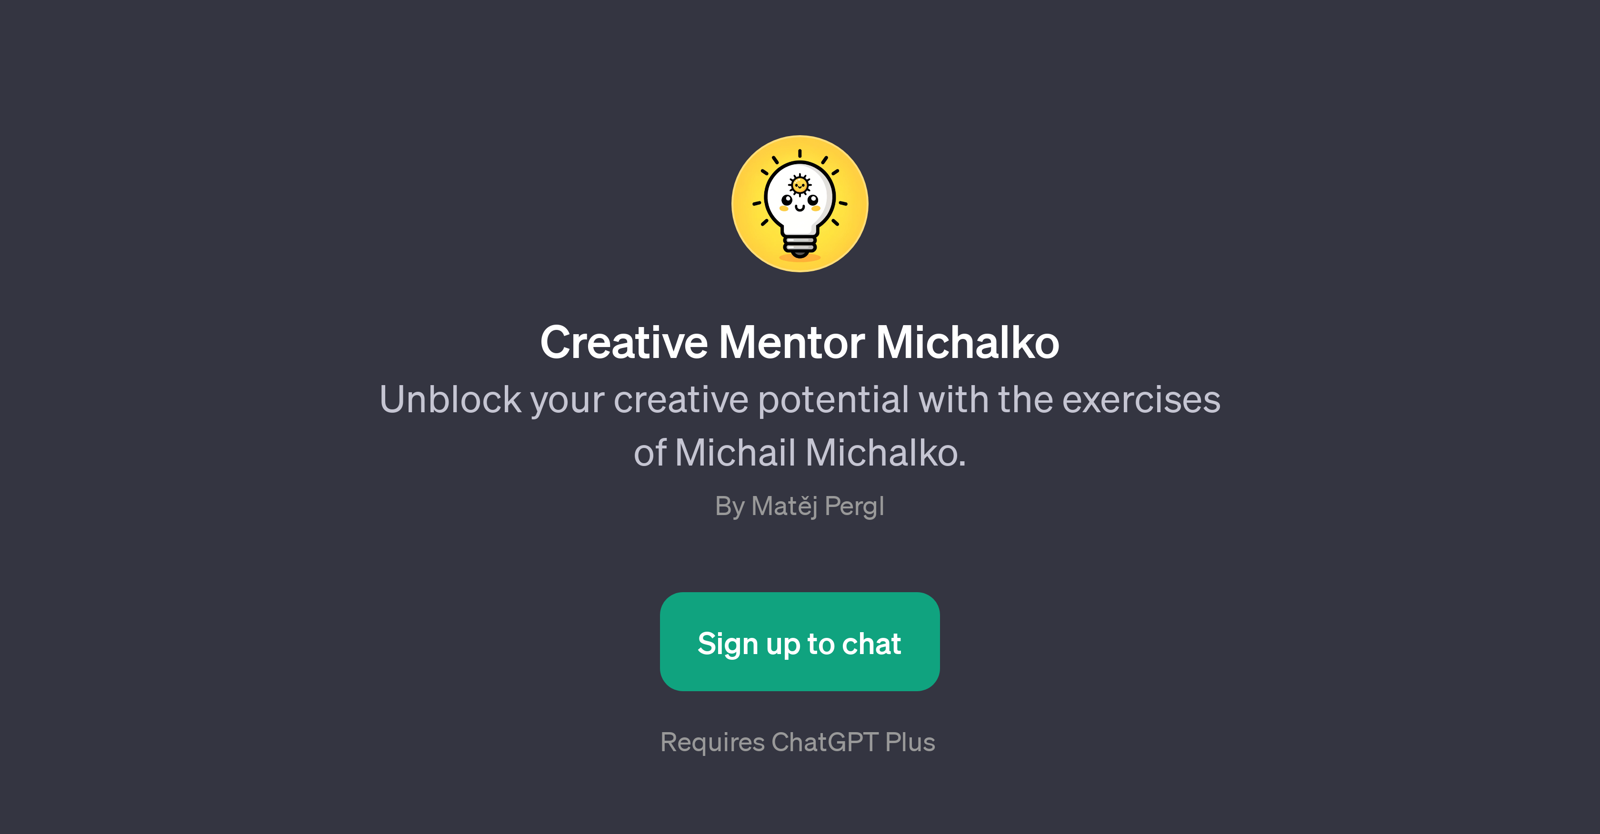 Creative Mentor Michalko website